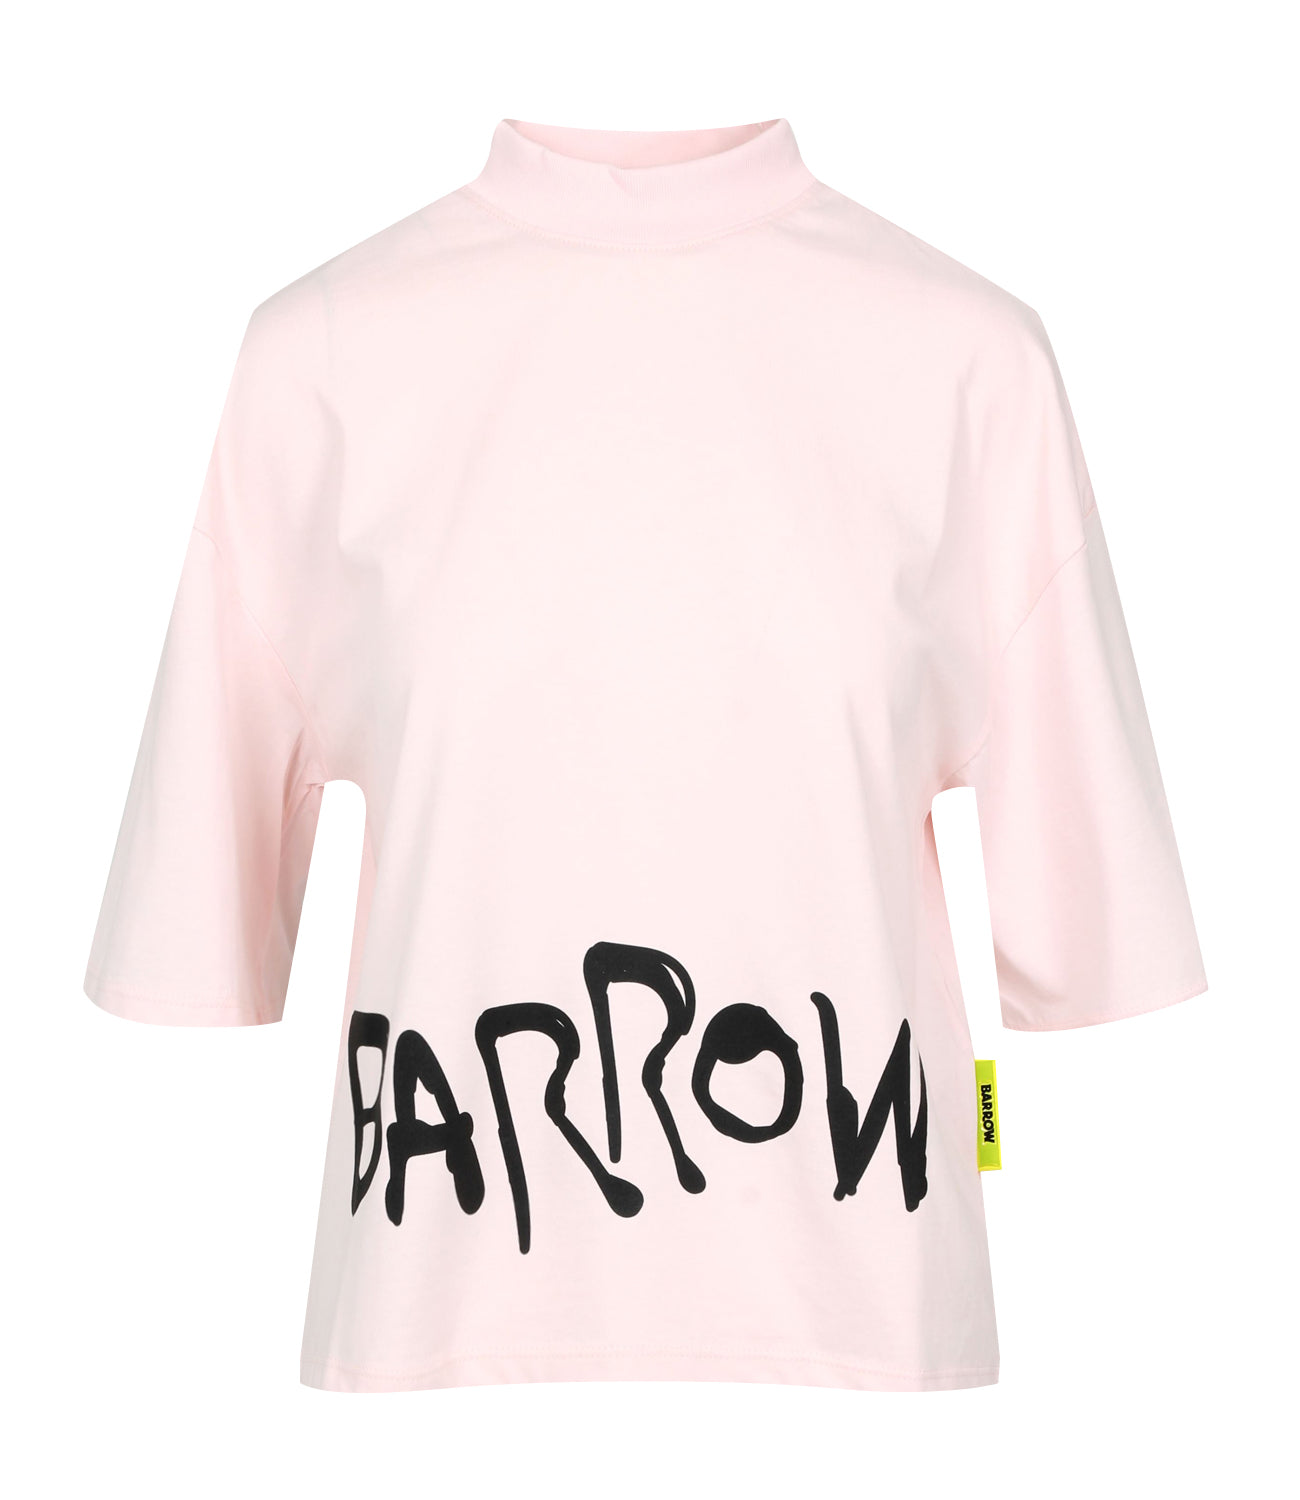 Barrow | T-Shirt Rosa chiaro